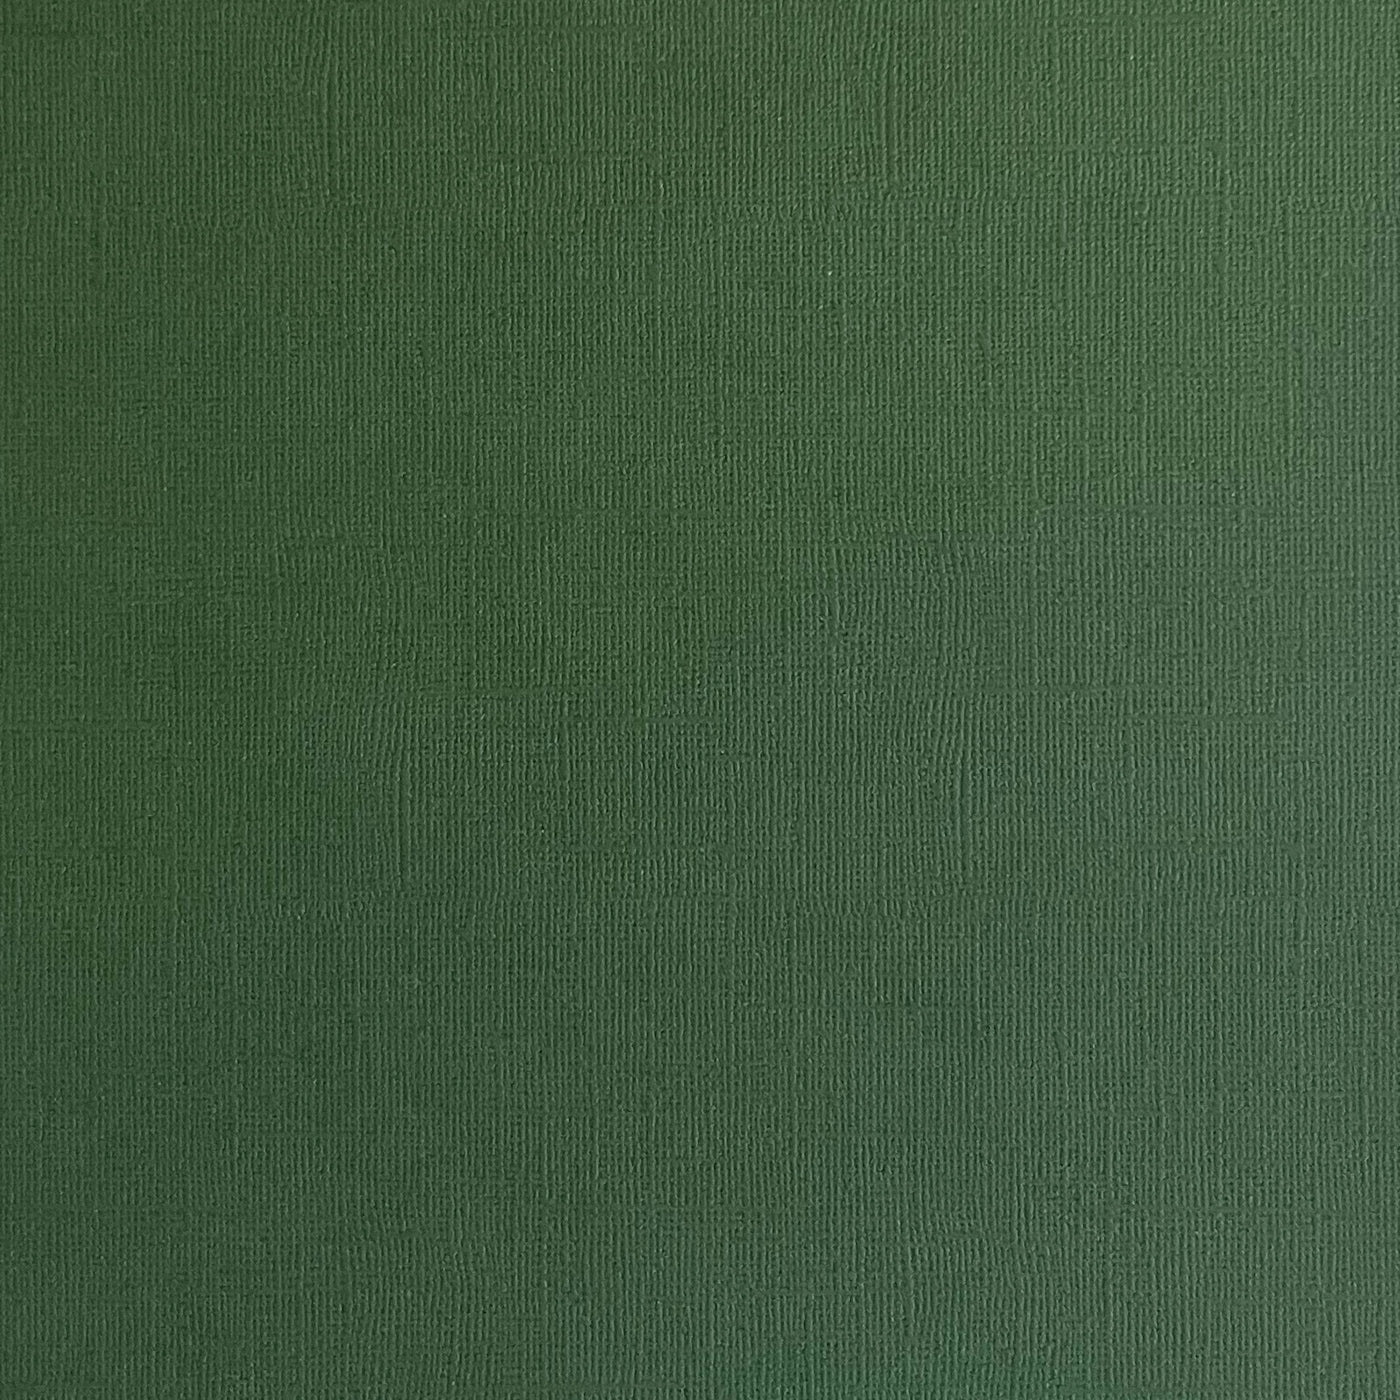 HUNTER GREEN - Pine Green Textured 12x12 Cardstock - Encore Paper